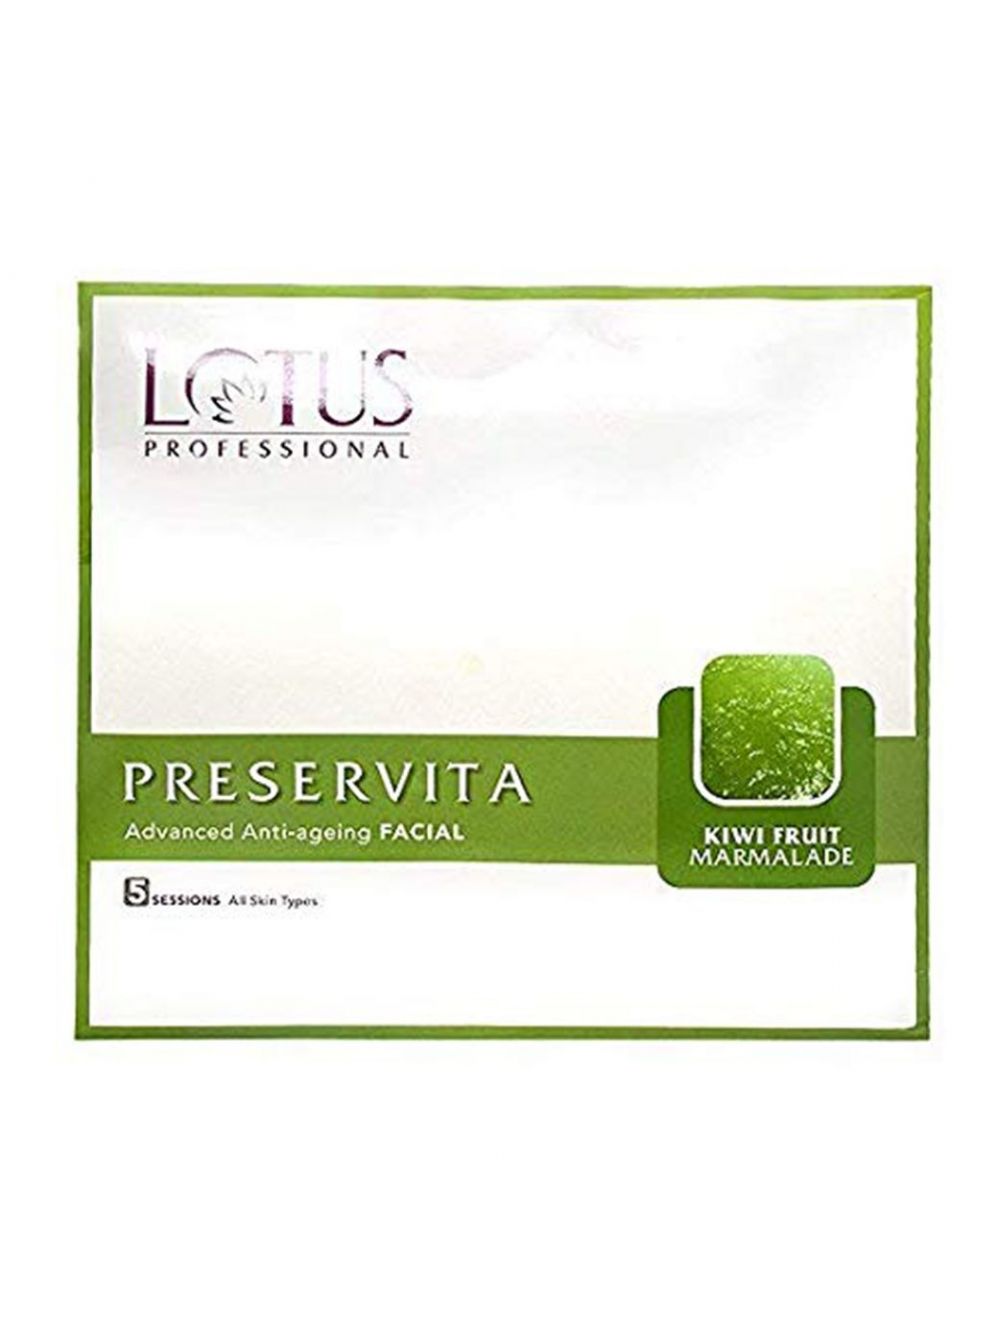 Lotus Professional Preservita Advanced Anti-Ageing Facial Kit - Kiwi Fruit Marmalade